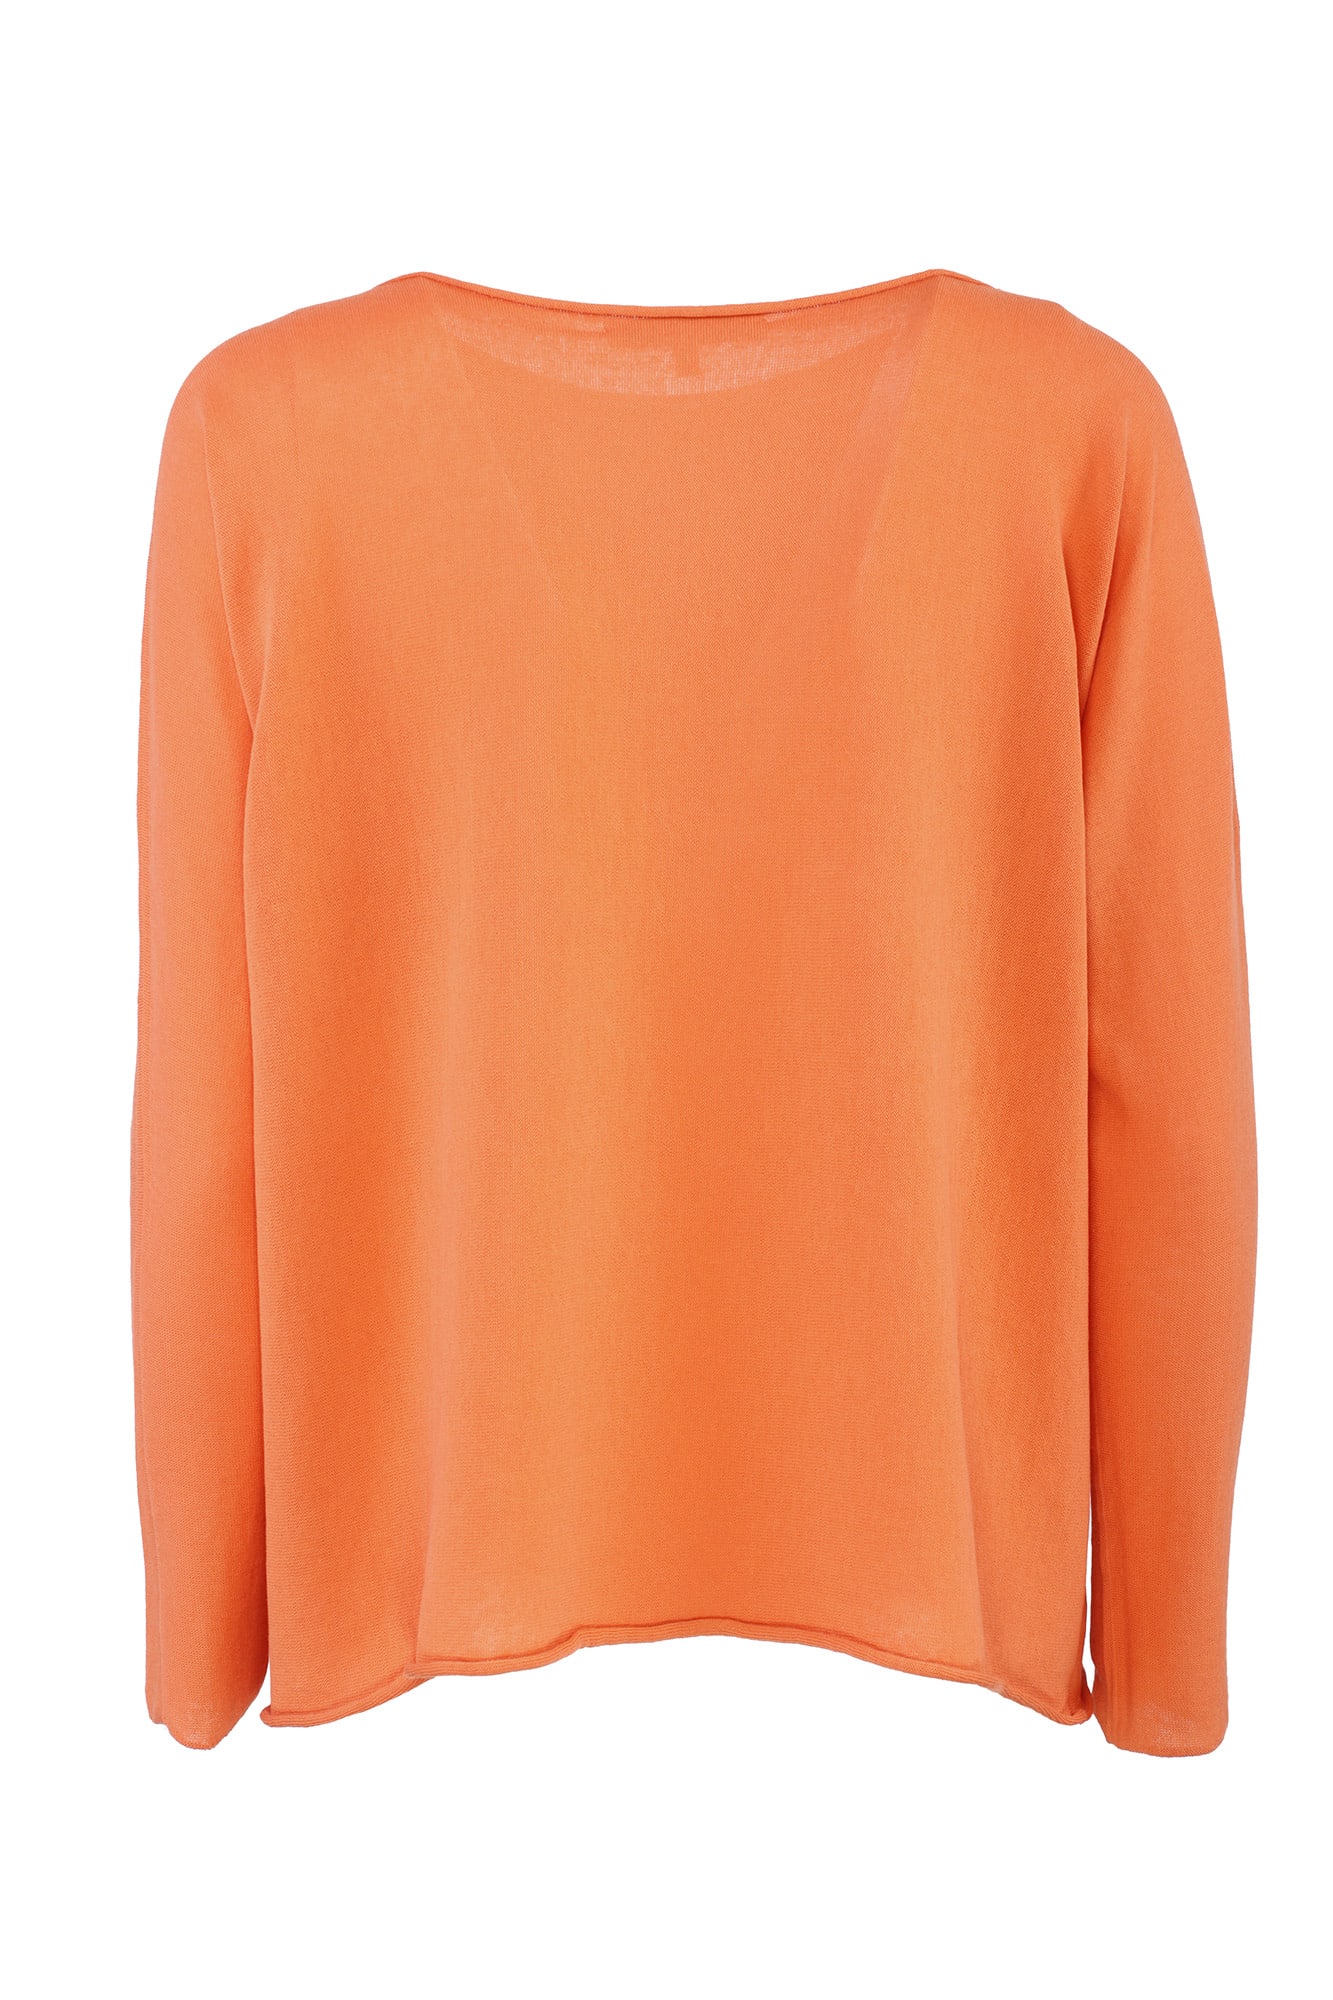 Shop Antonelli Firenze Sweaters Orange